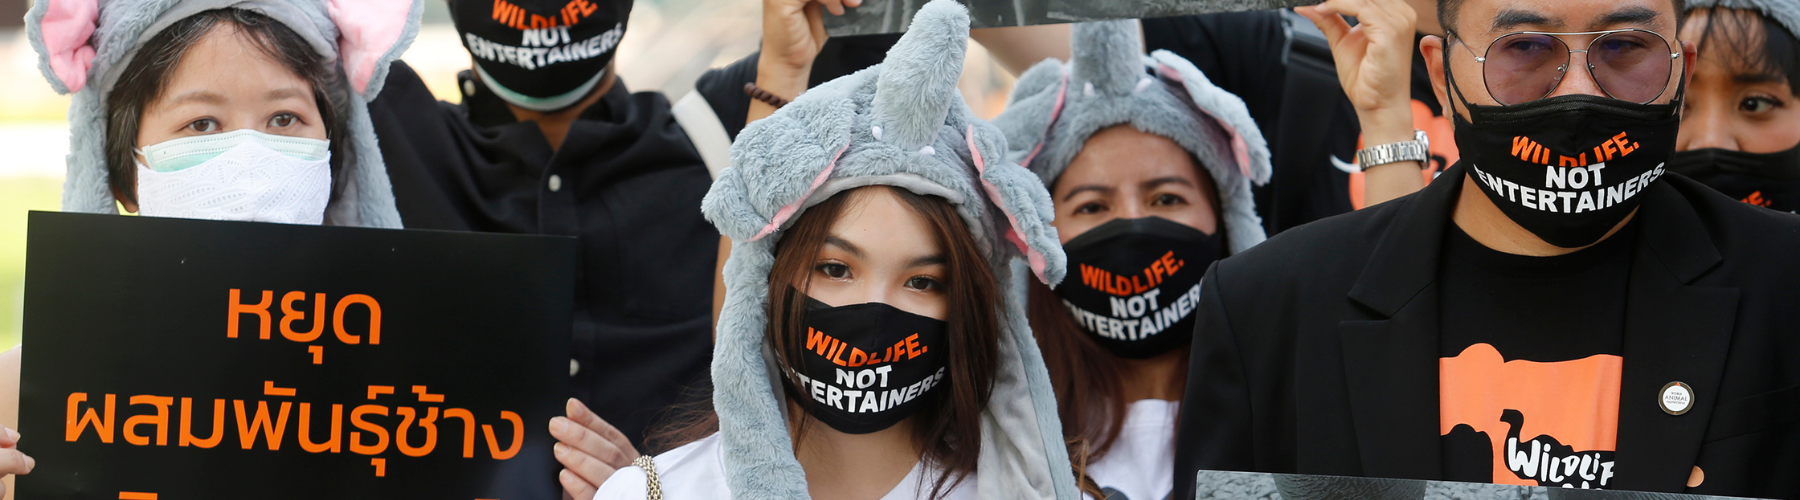 Wildlife Not Entertainment Protestors